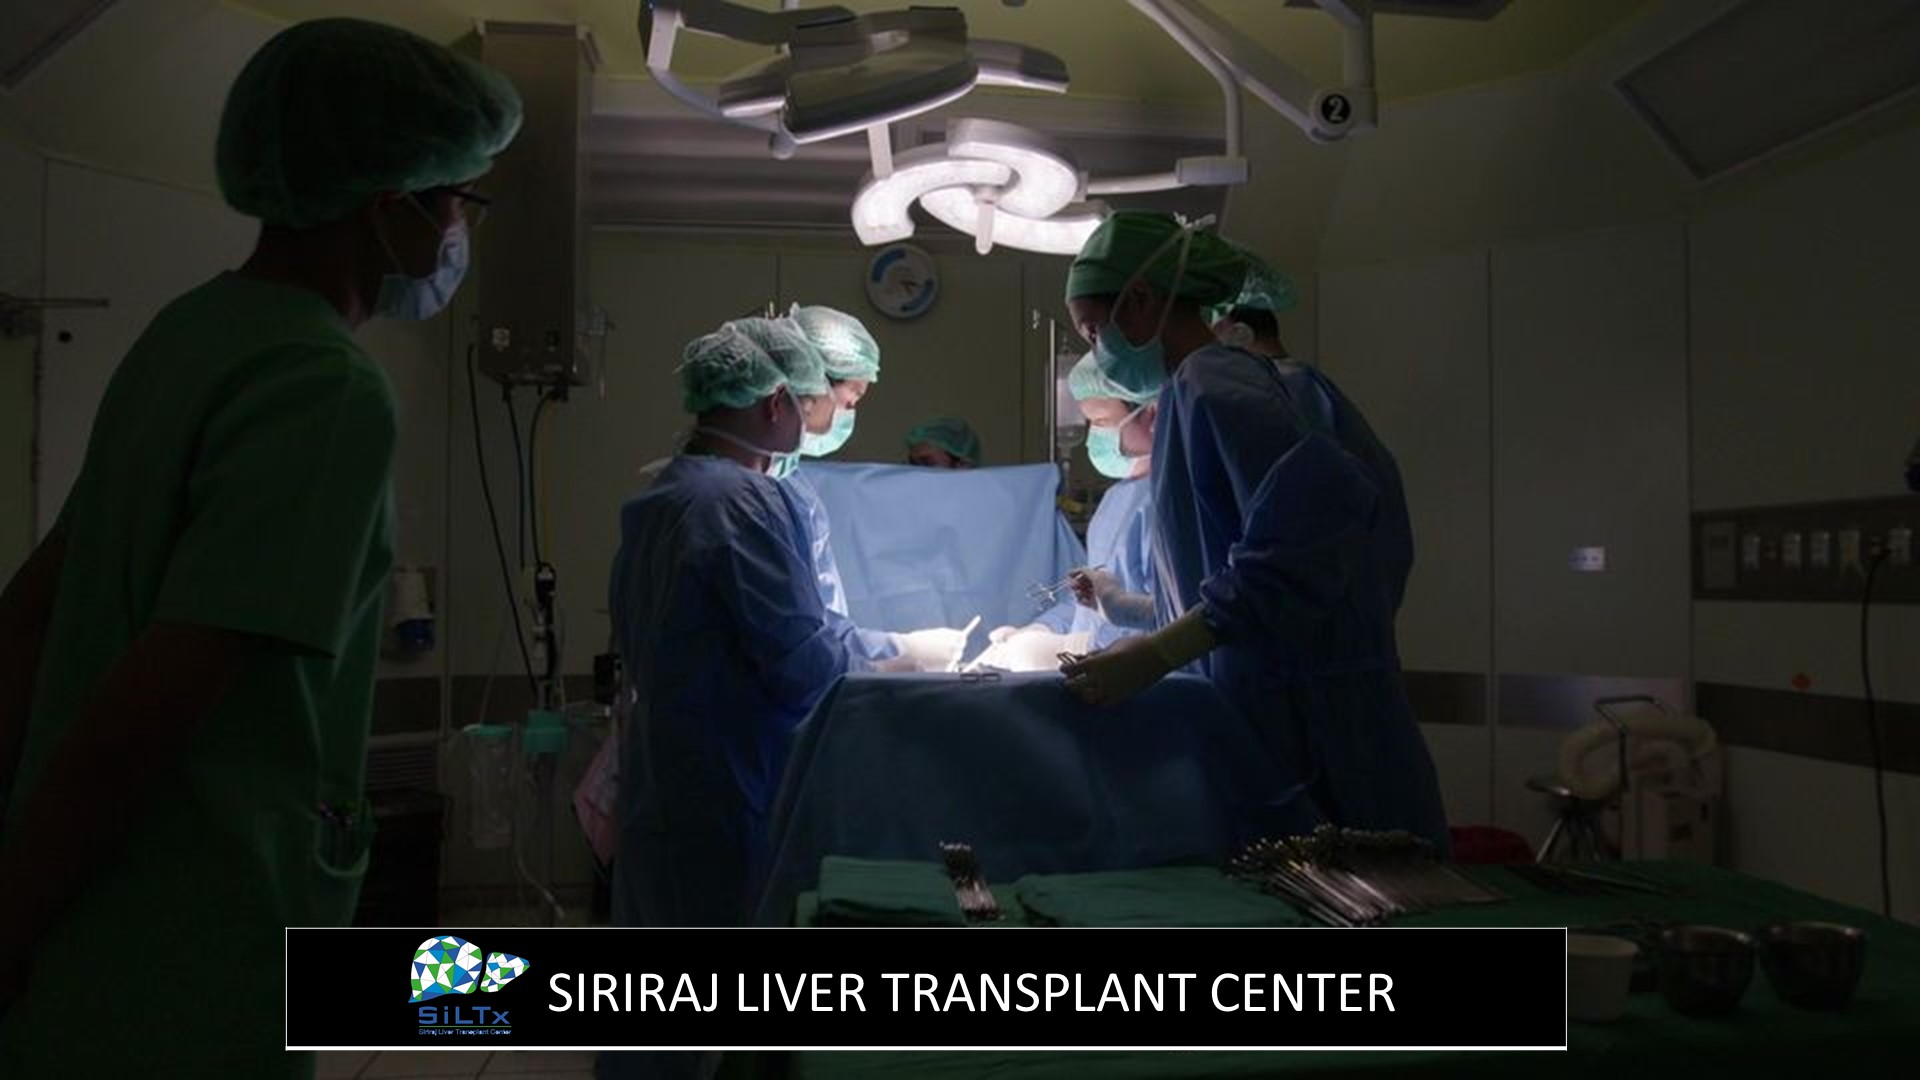 One Day with Siriraj Liver Transplant Center